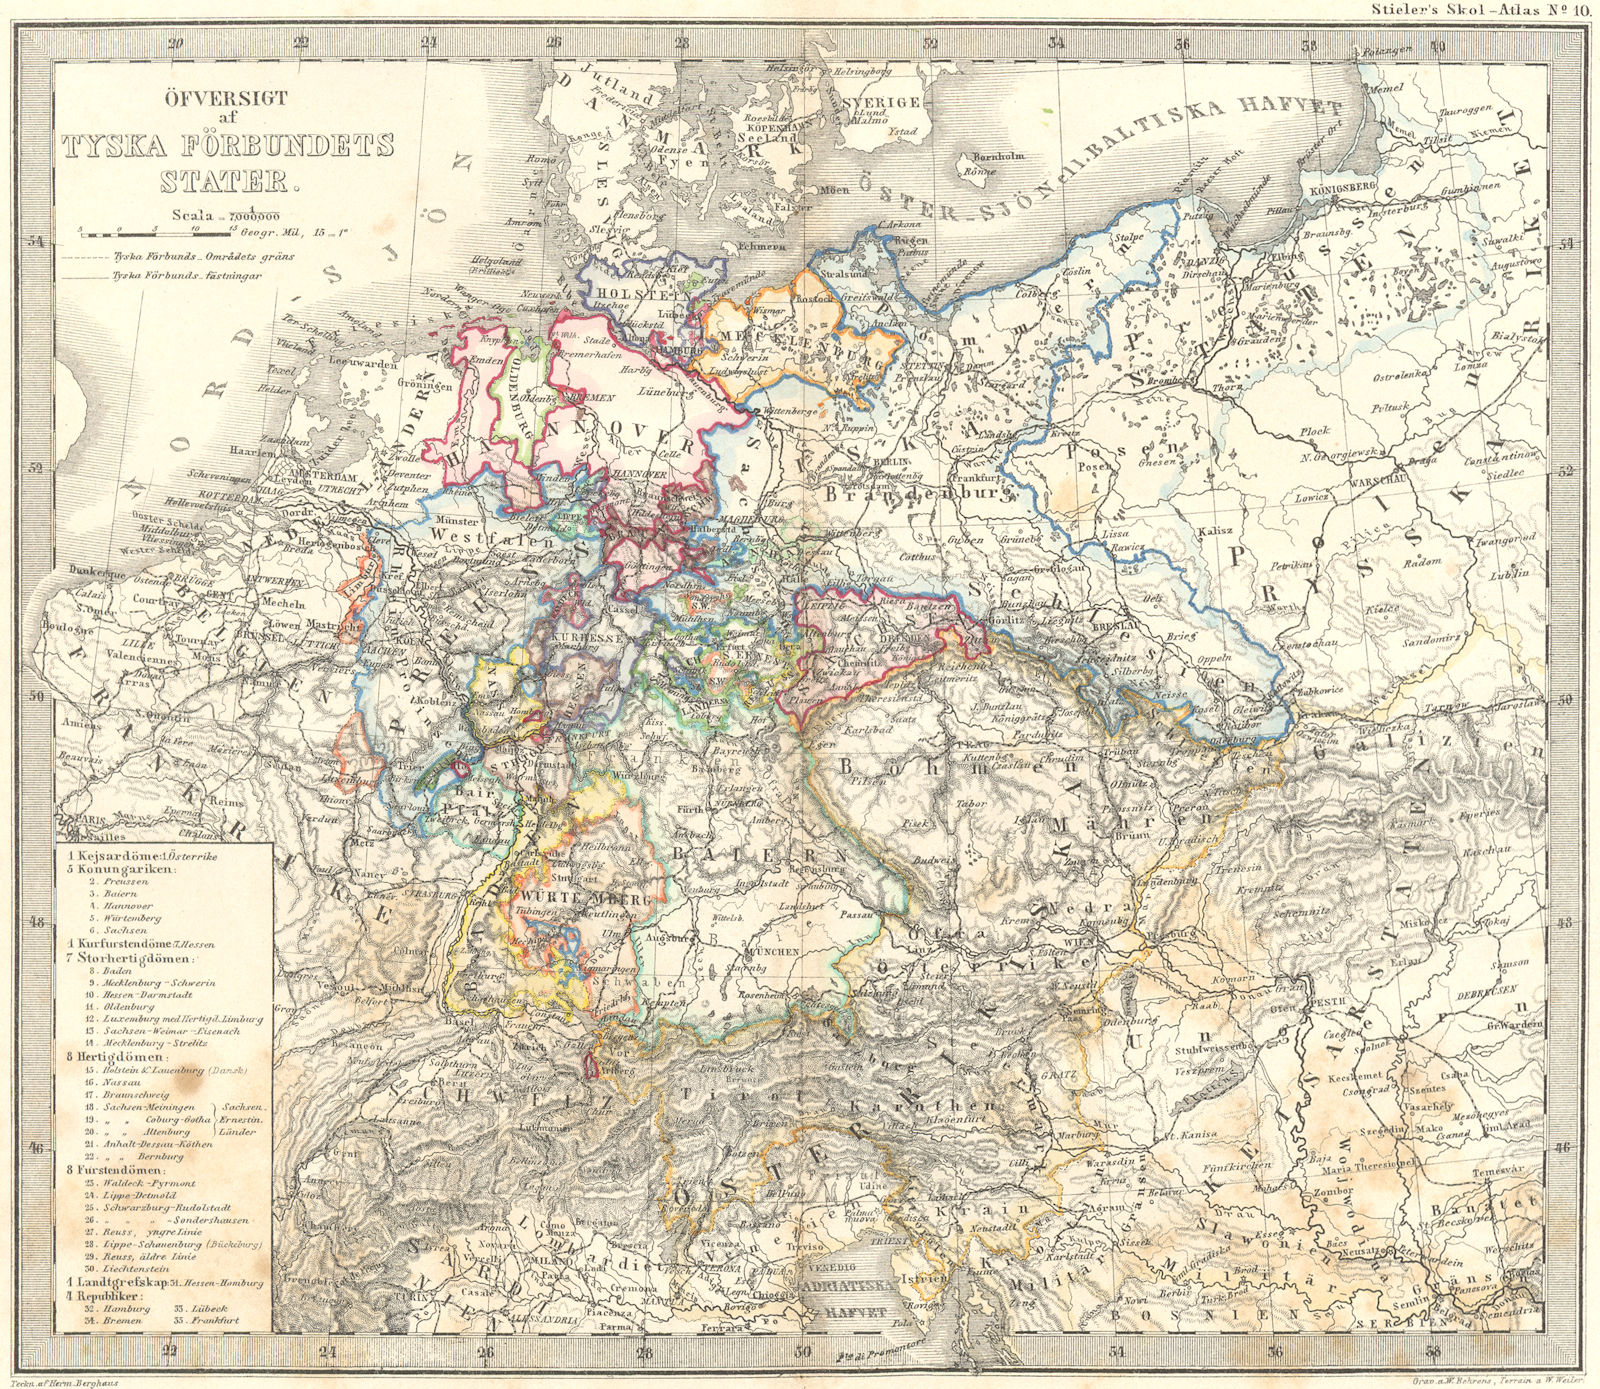 GERMANY. Tyska Forbundets Stater. Stieler 1861 old antique map plan chart